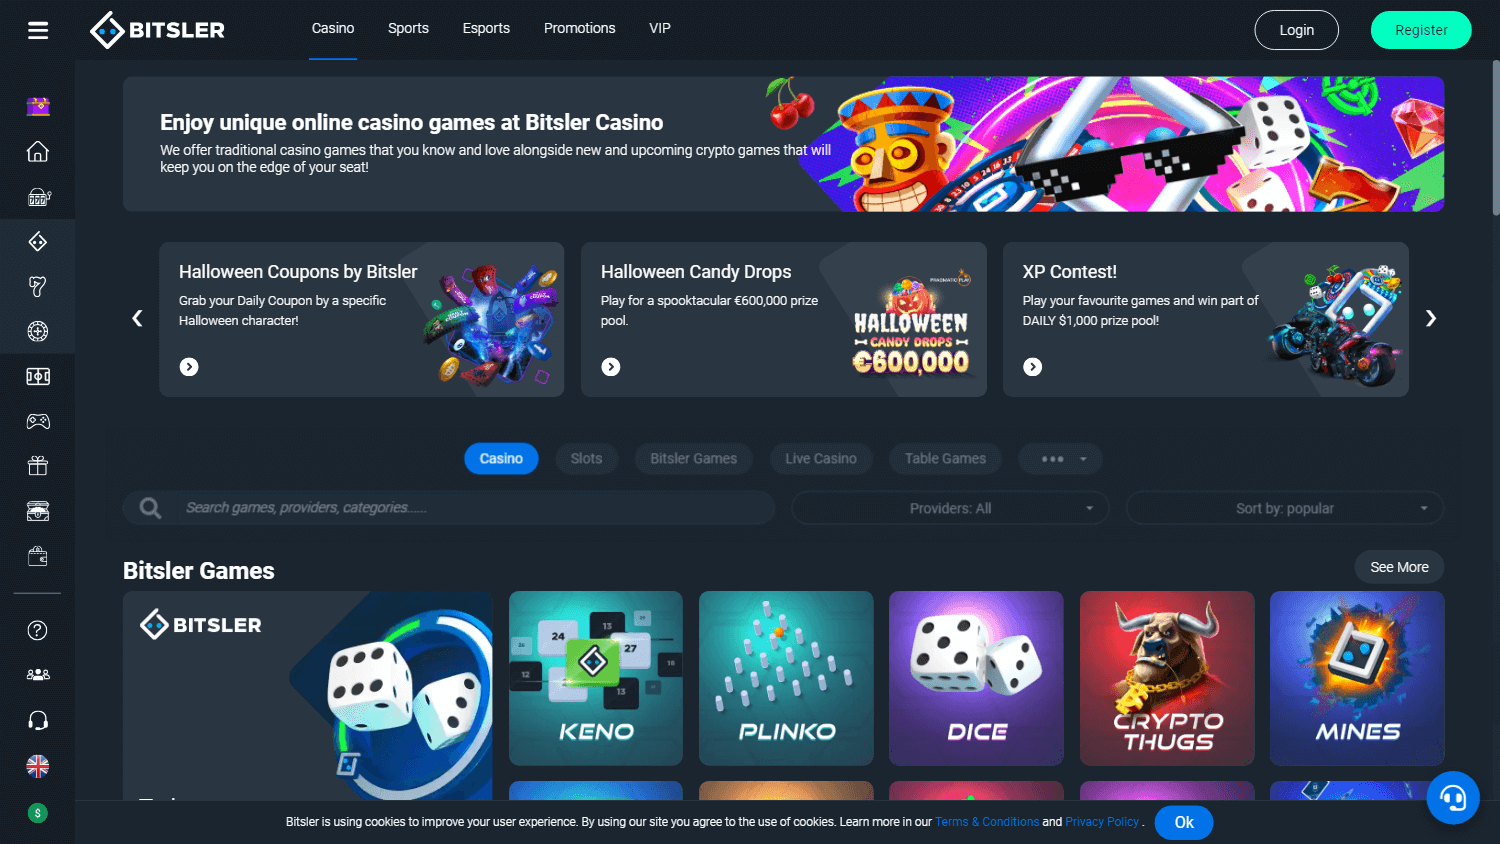 bitsler_casino_game_gallery_desktop